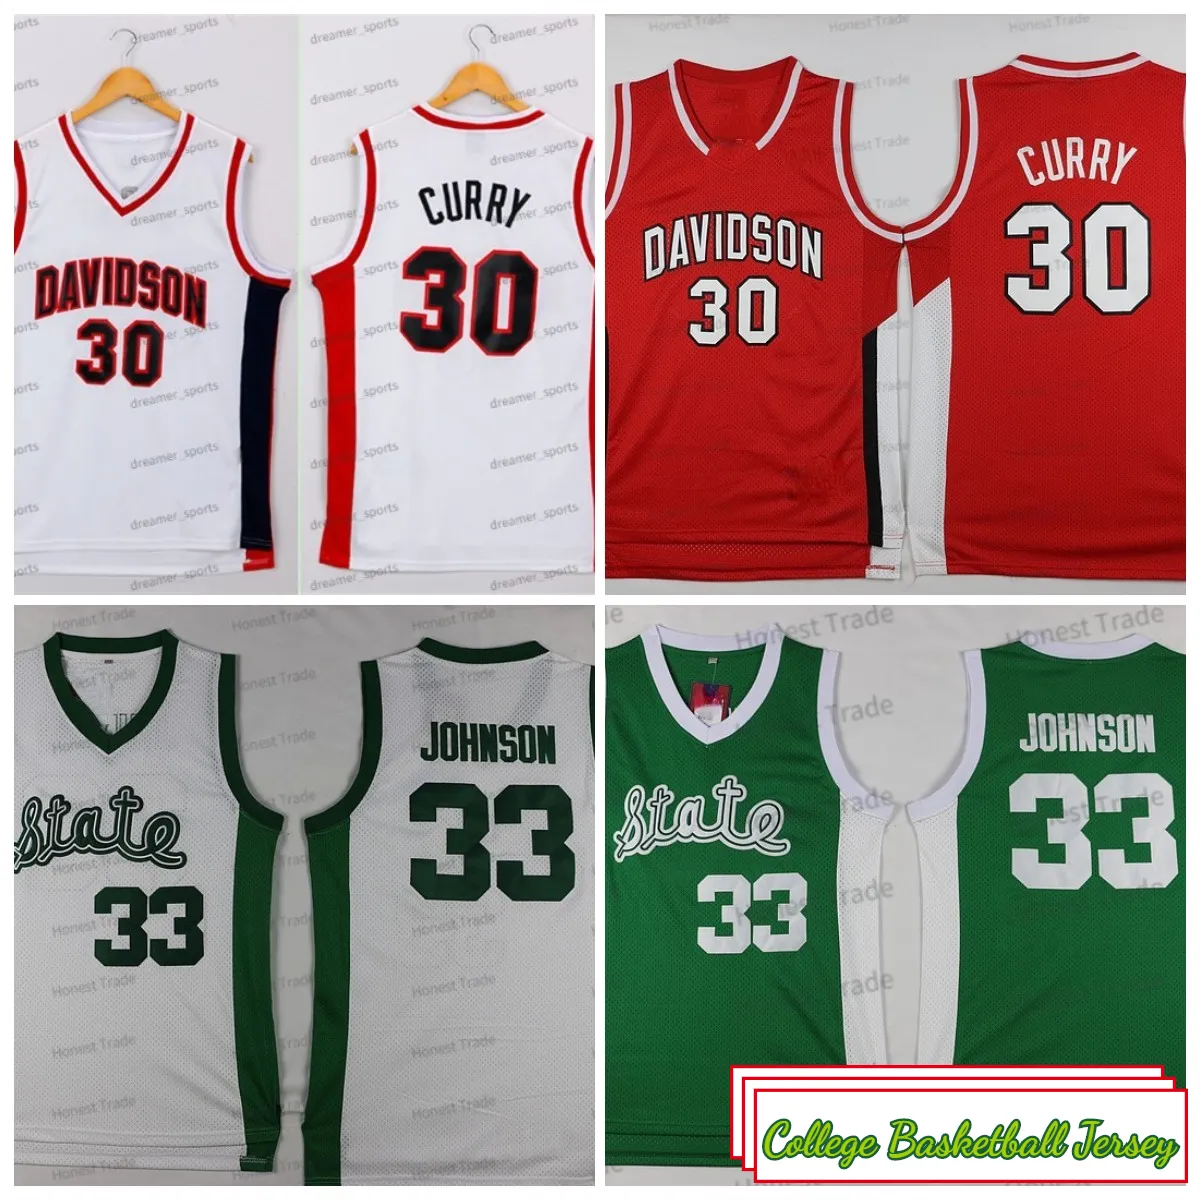 NCAA Basketball Jersey State 33 Johnson Davidson 30 Stephen White Curry Green High School Retro Męskie koszulki